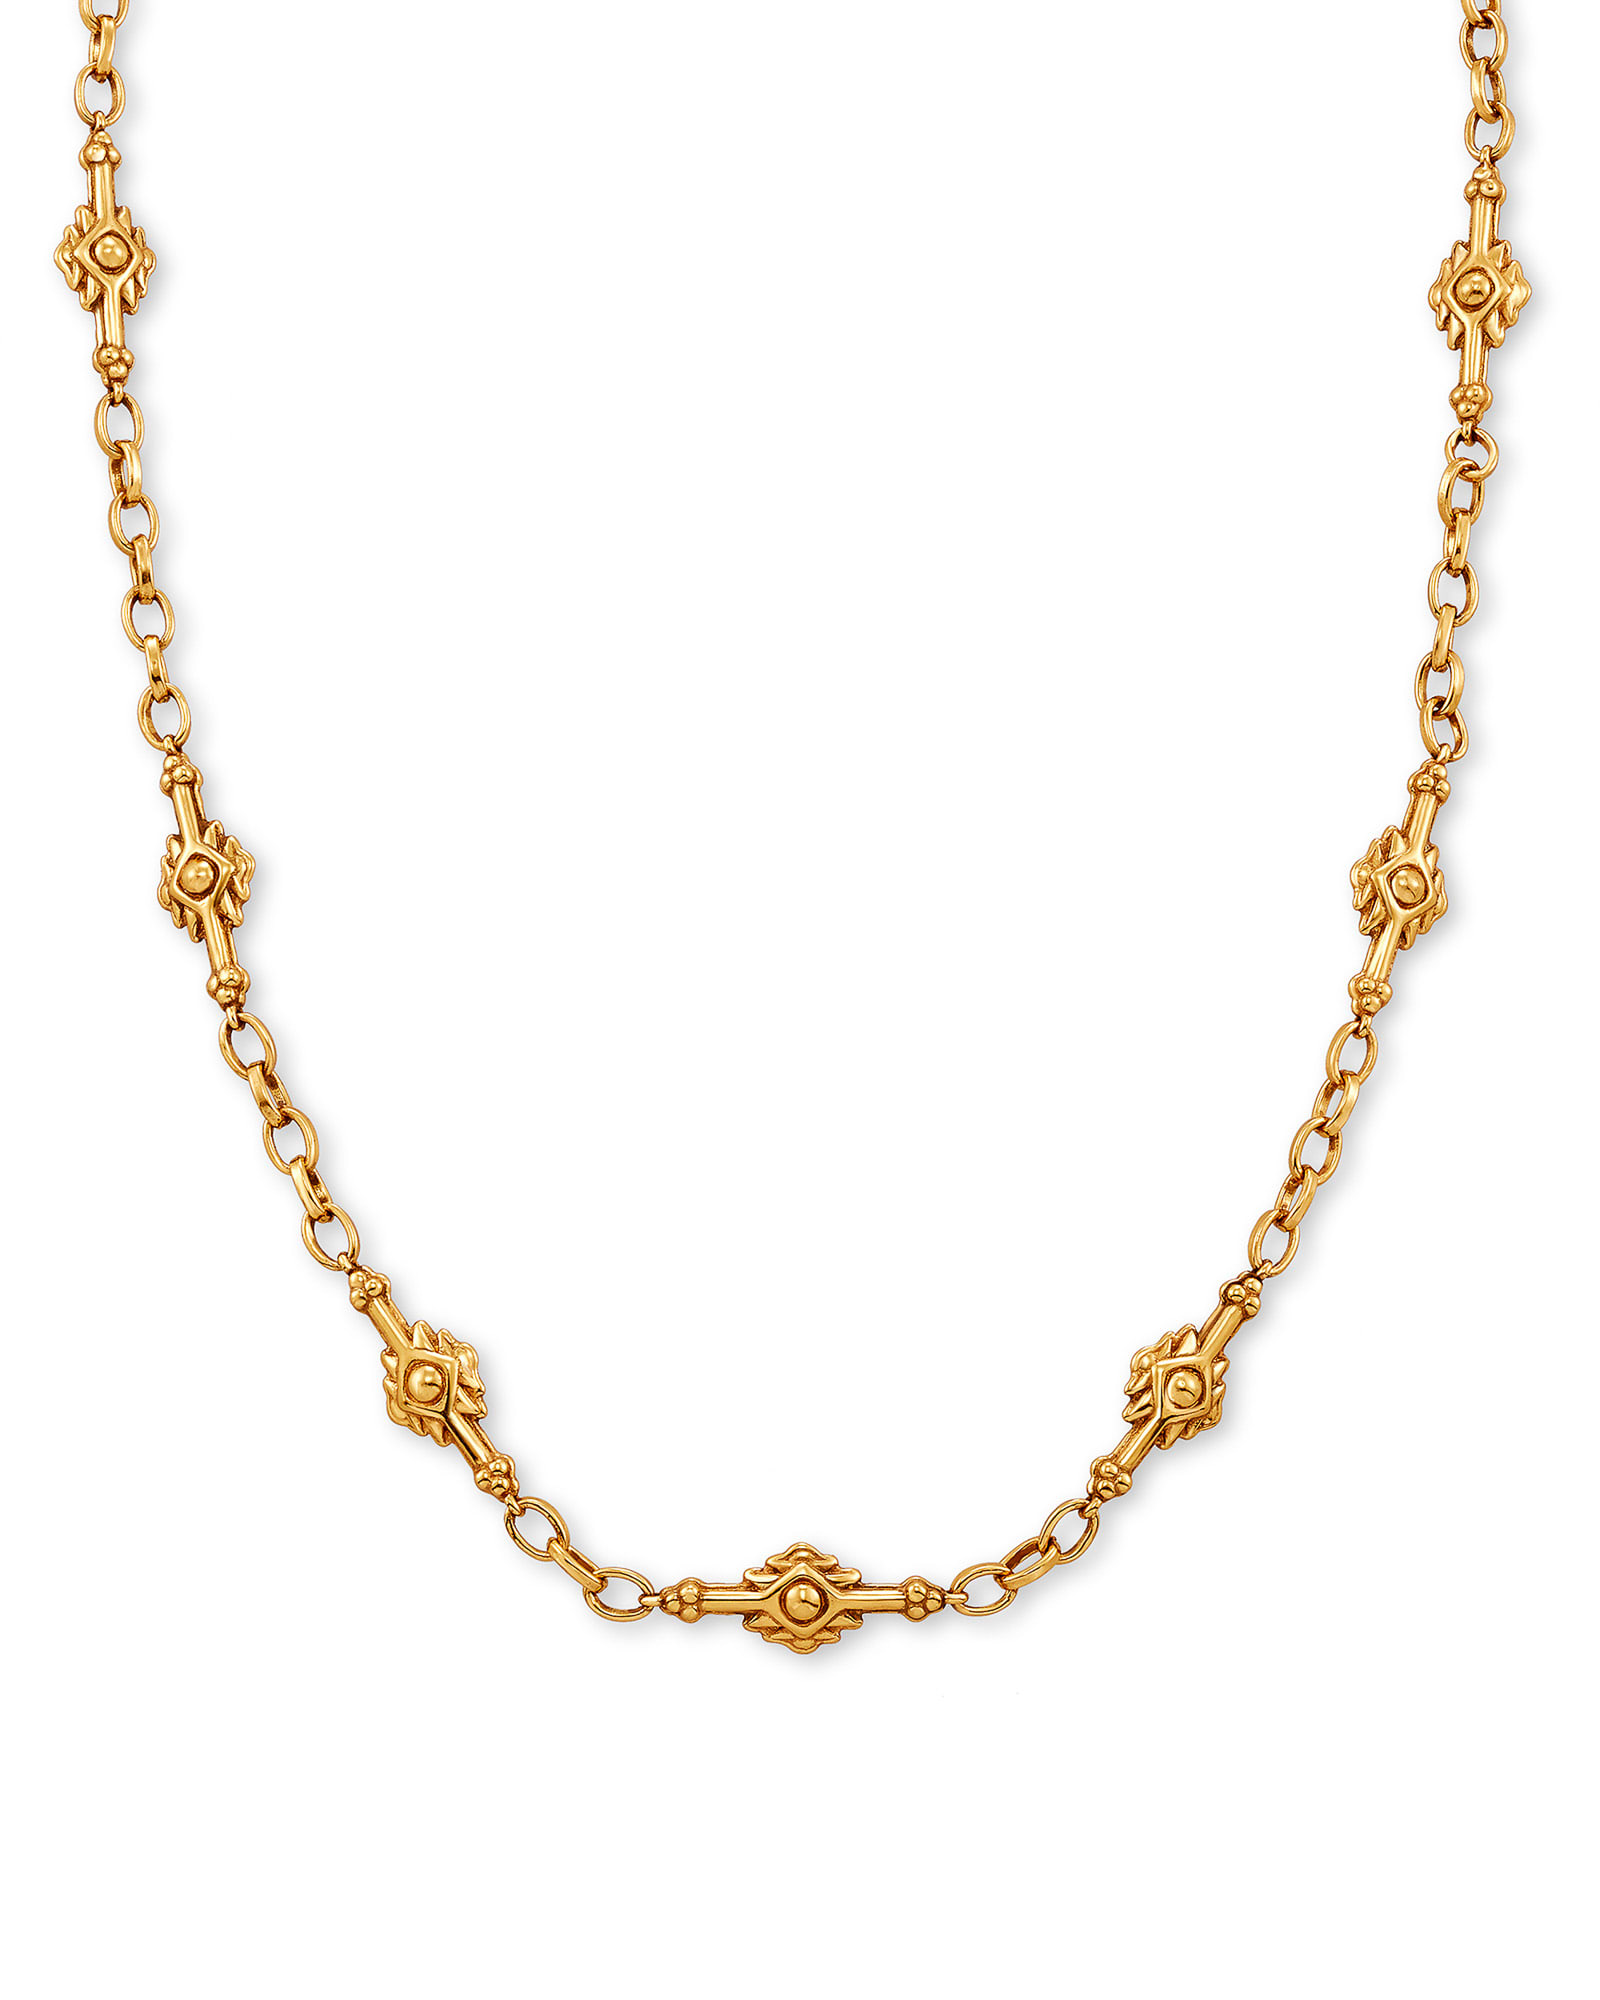 Shiva Strand Necklace in Vintage Gold